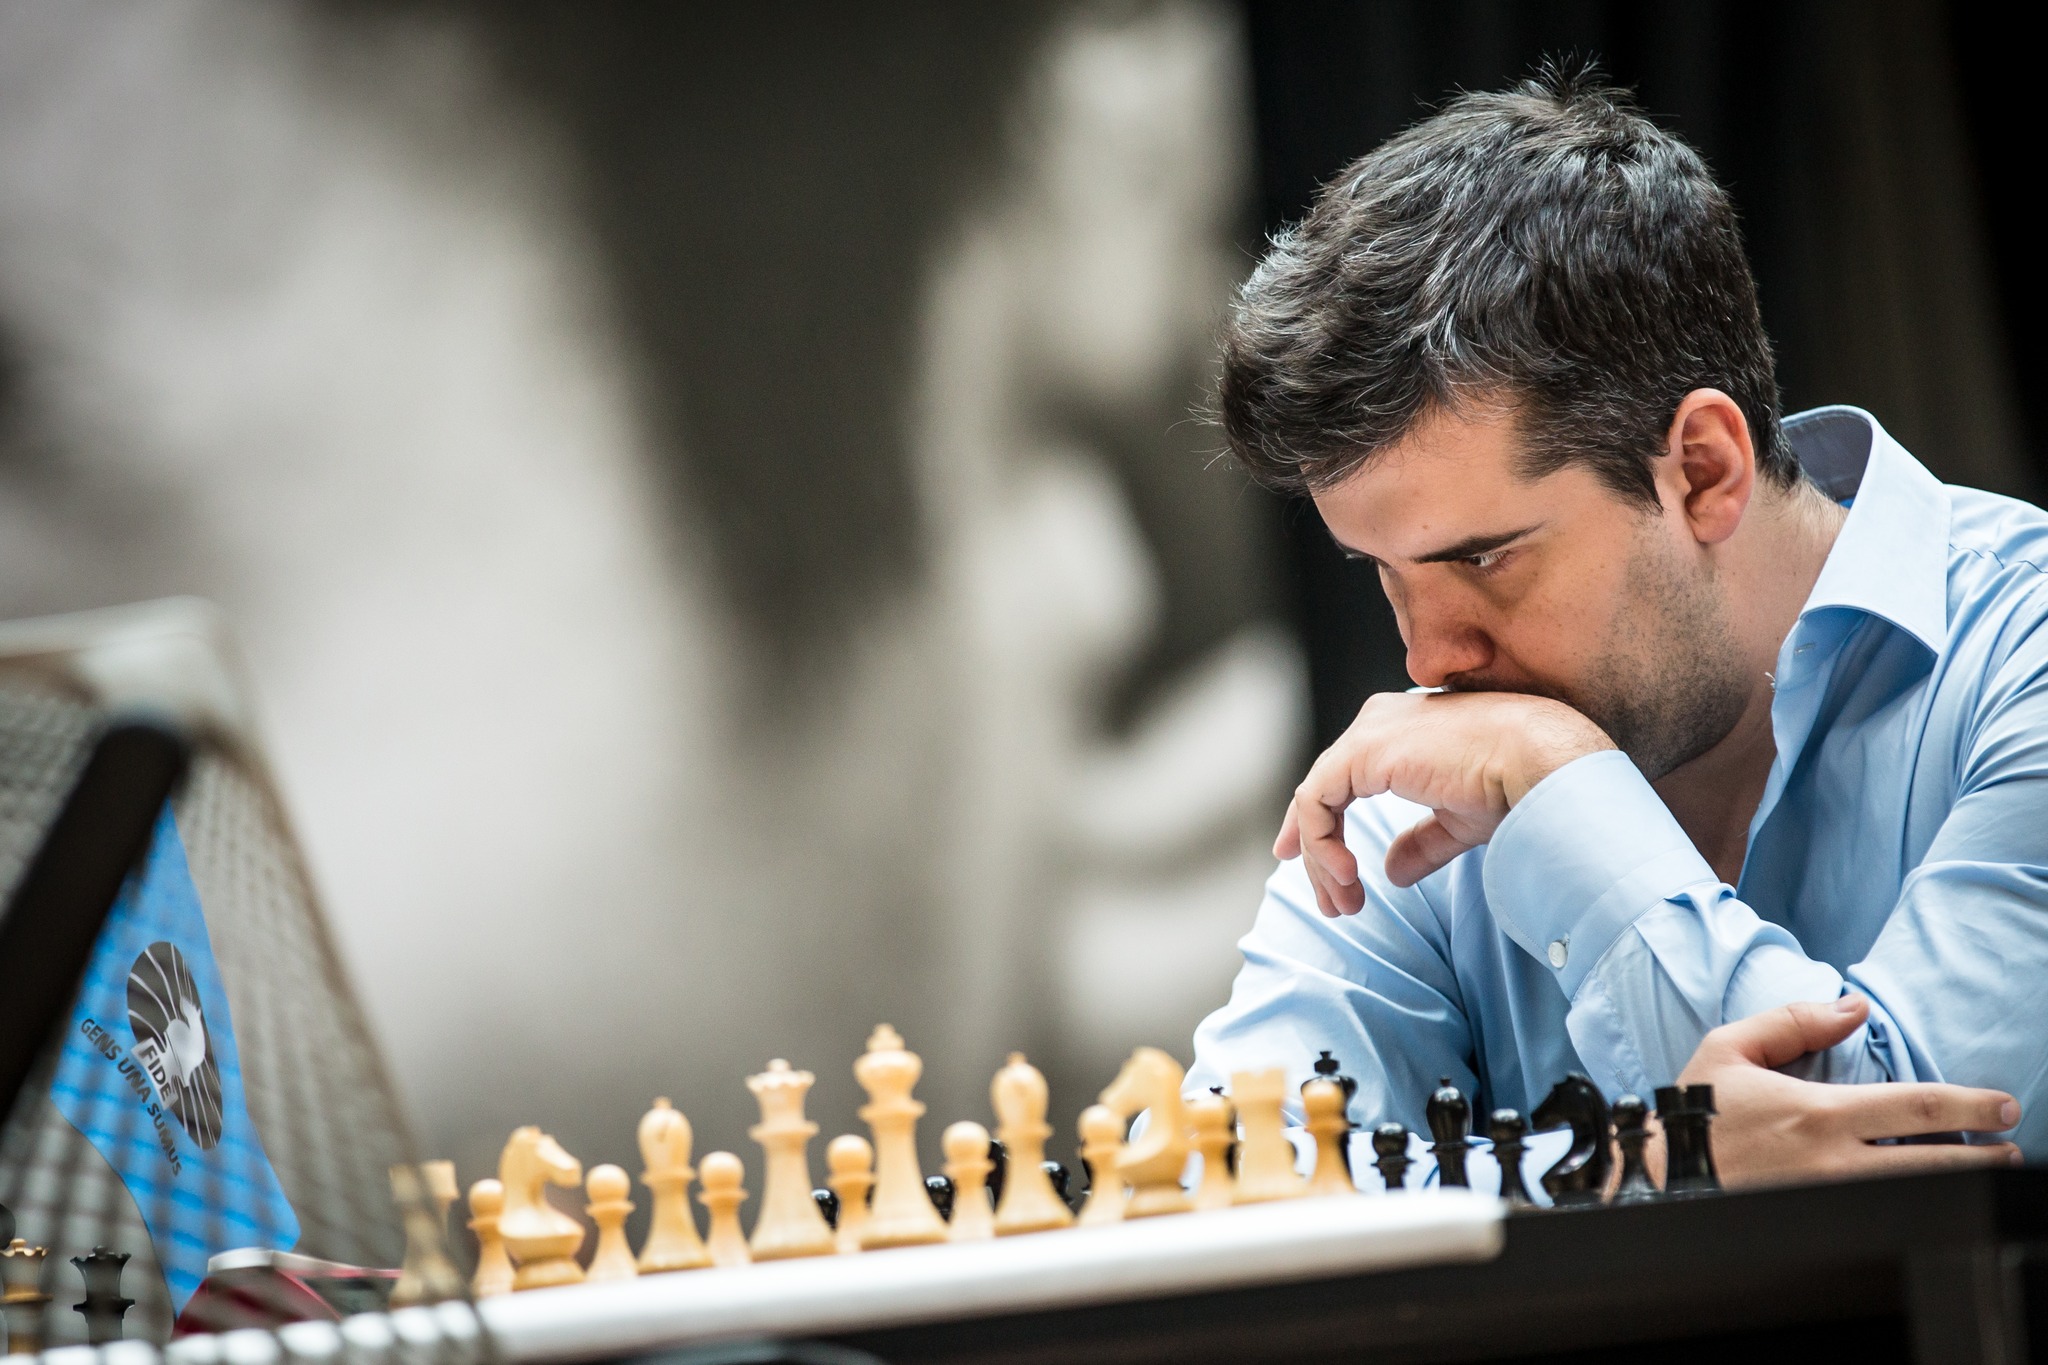 Amazing Blitz Chess Game, Magnus Carlsen vs Ding Liren